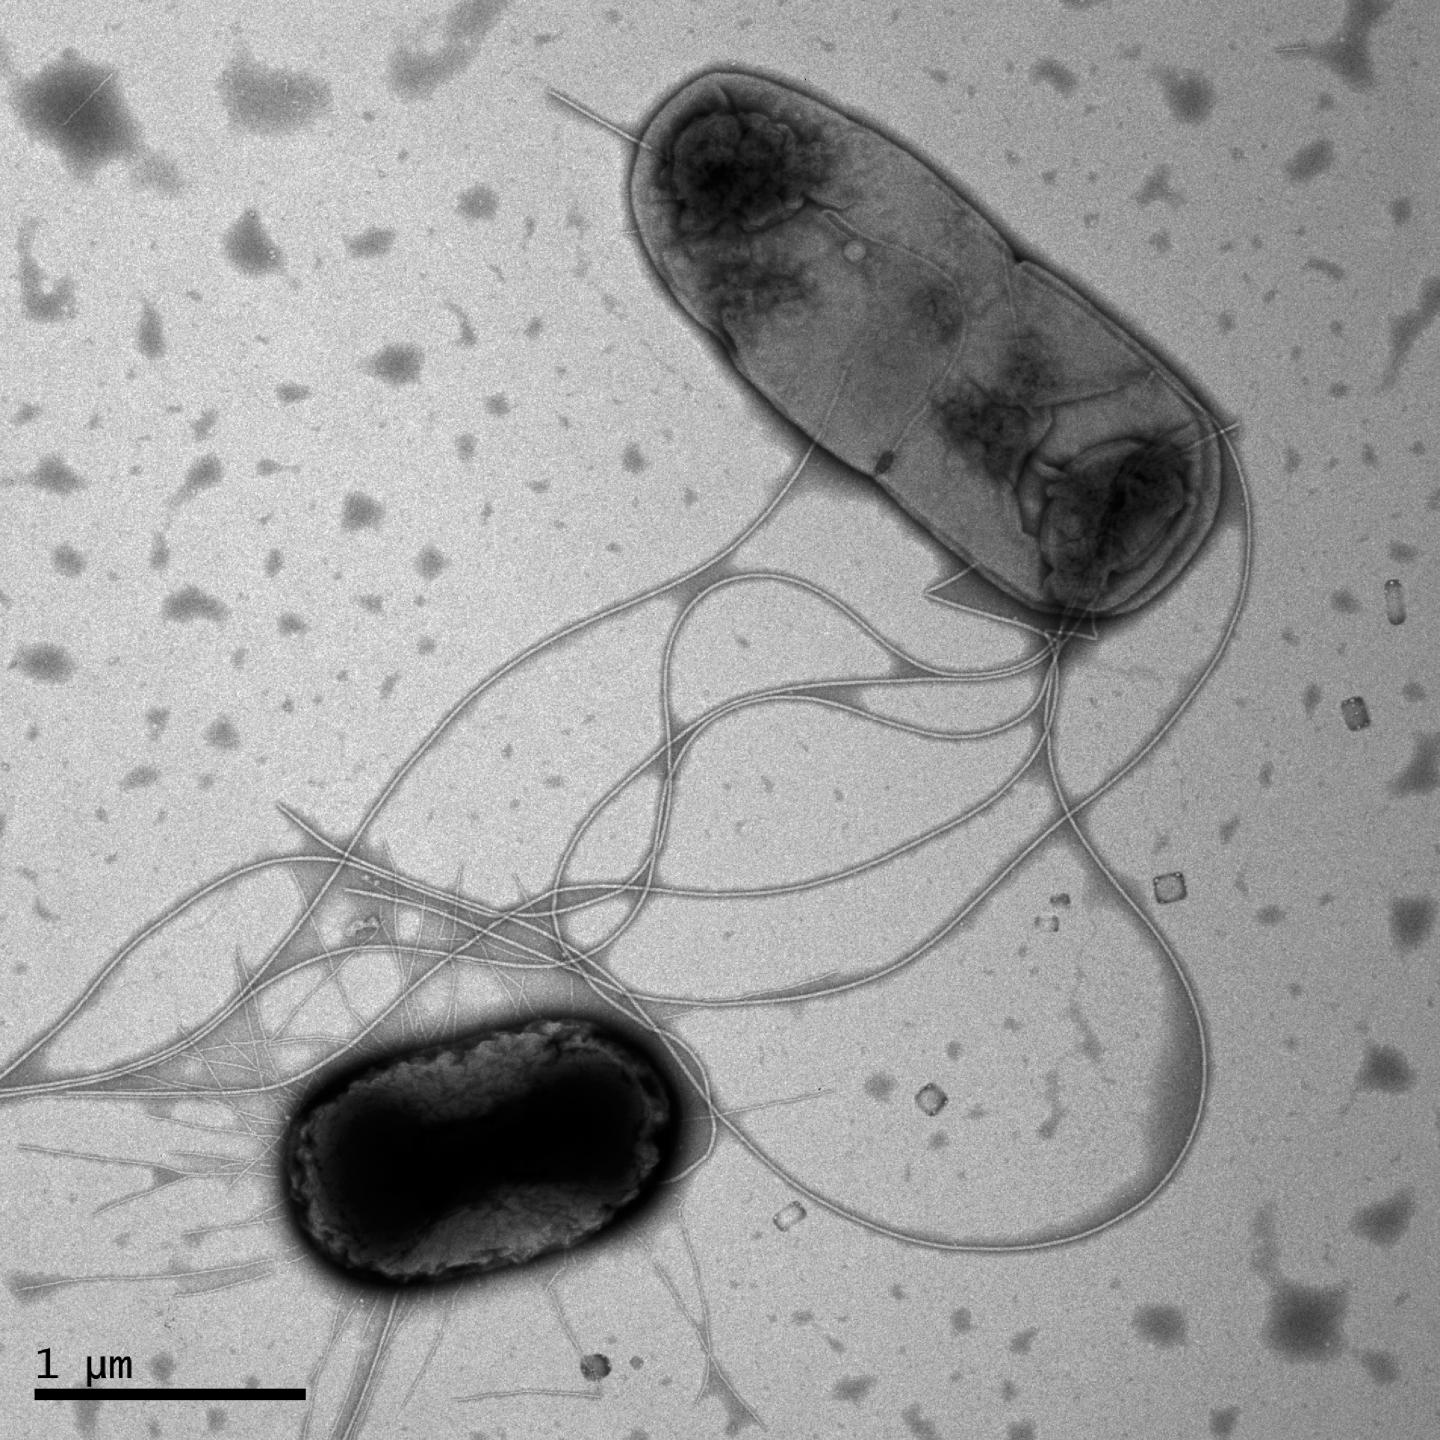 Electron Micrograph of Two Contacting <I>E. coli</I> Bacteria